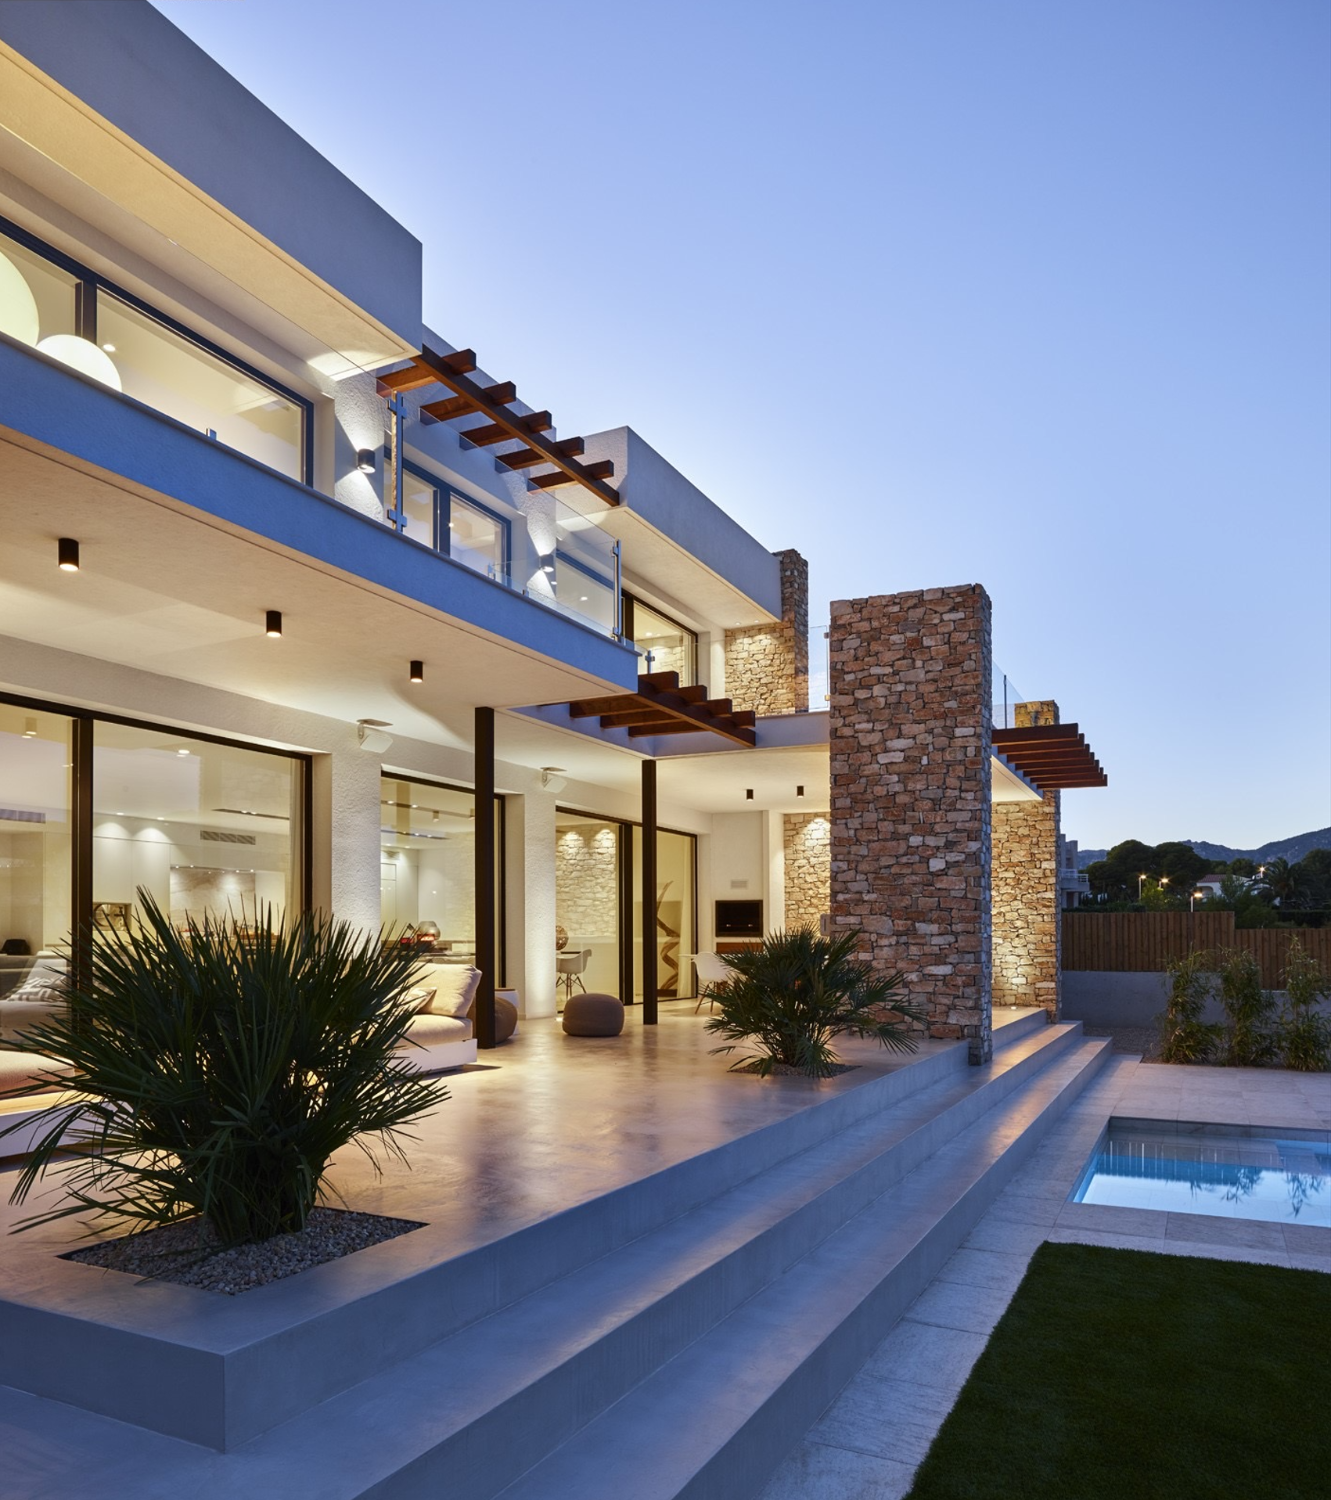 Magnificent luxury villa with sea view